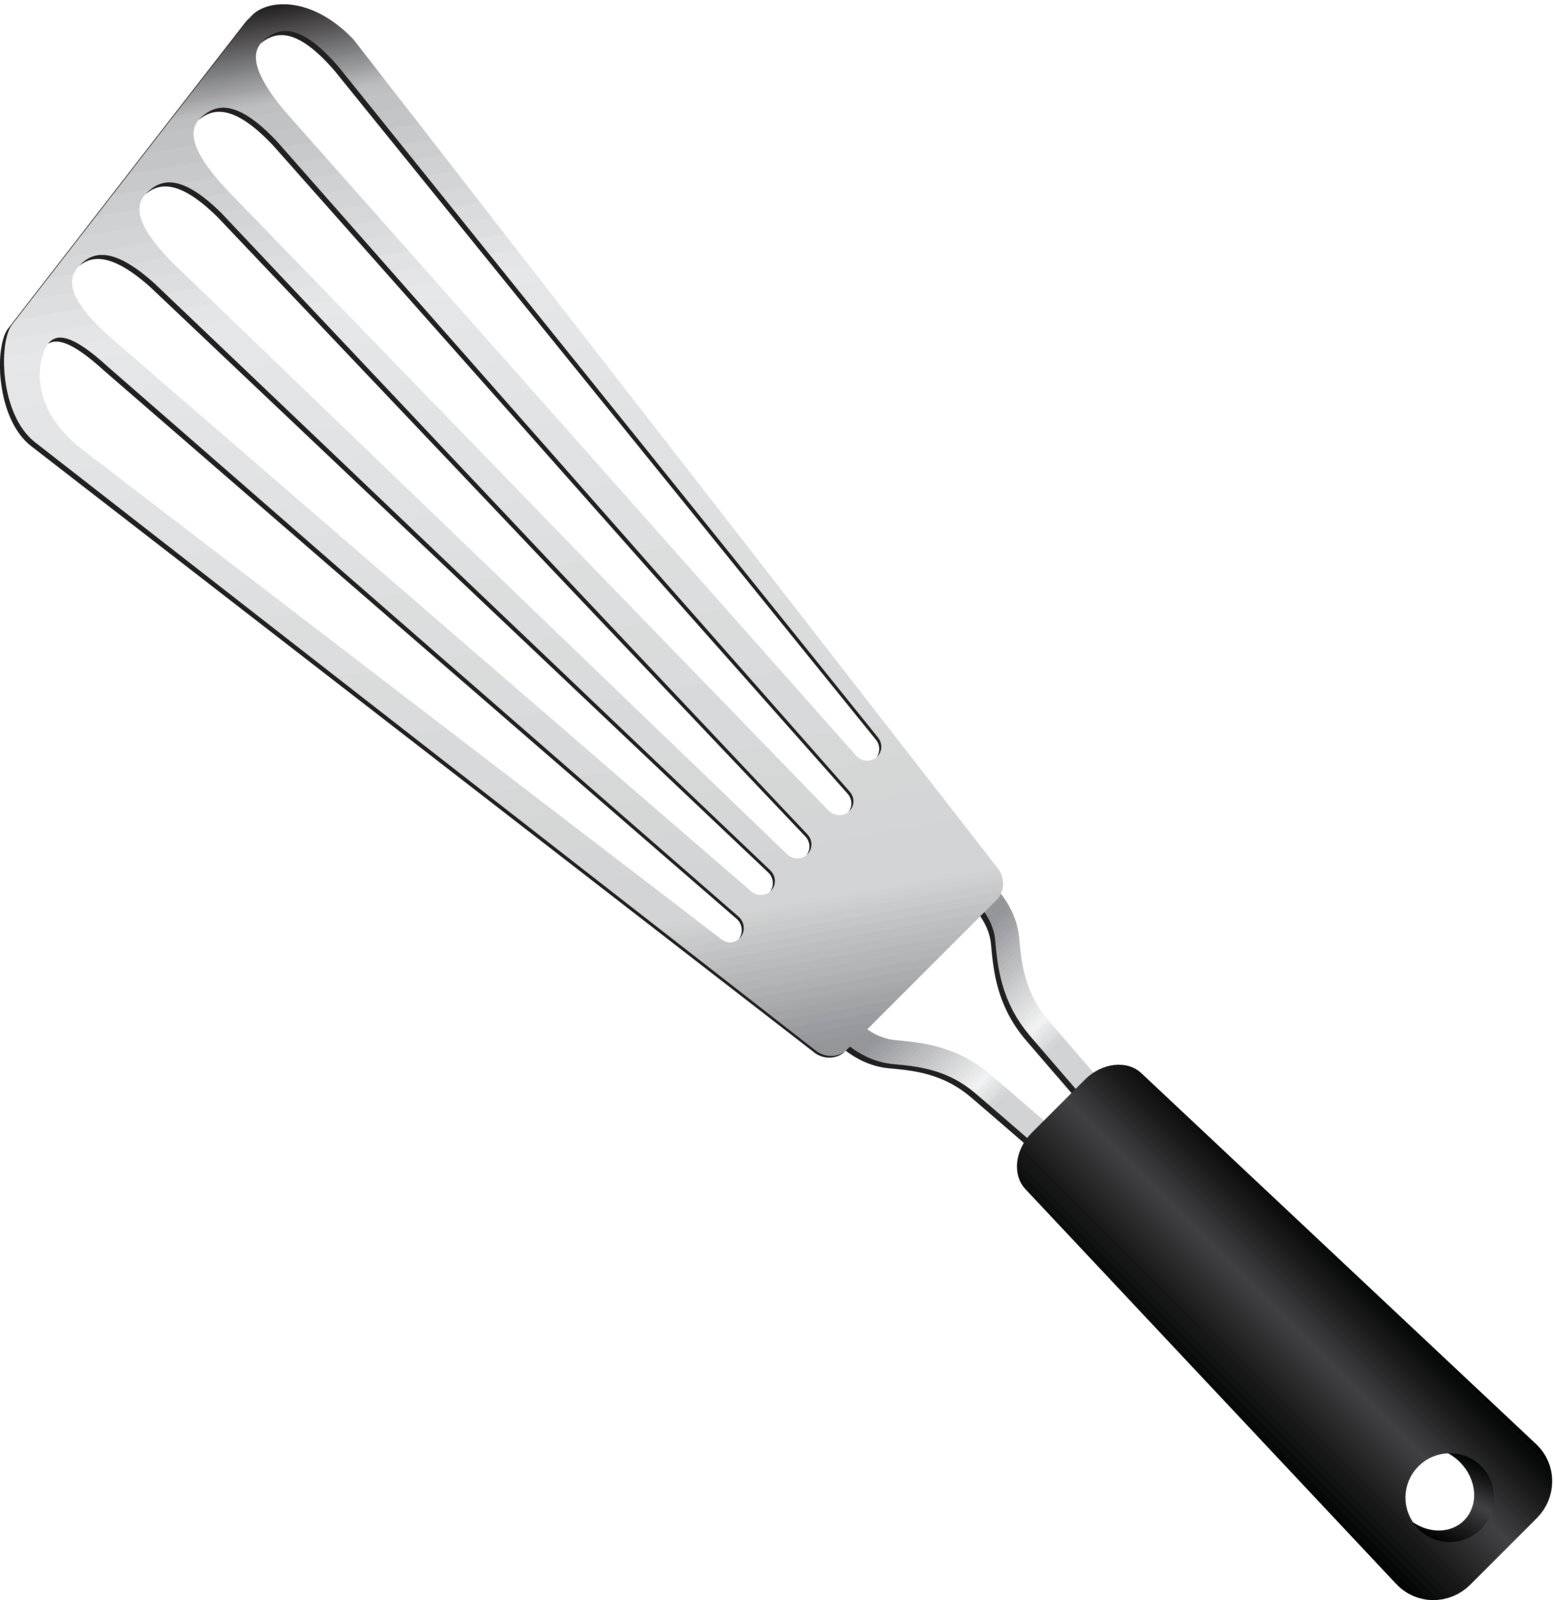 Stainless steel spatula by VIPDesignUSA